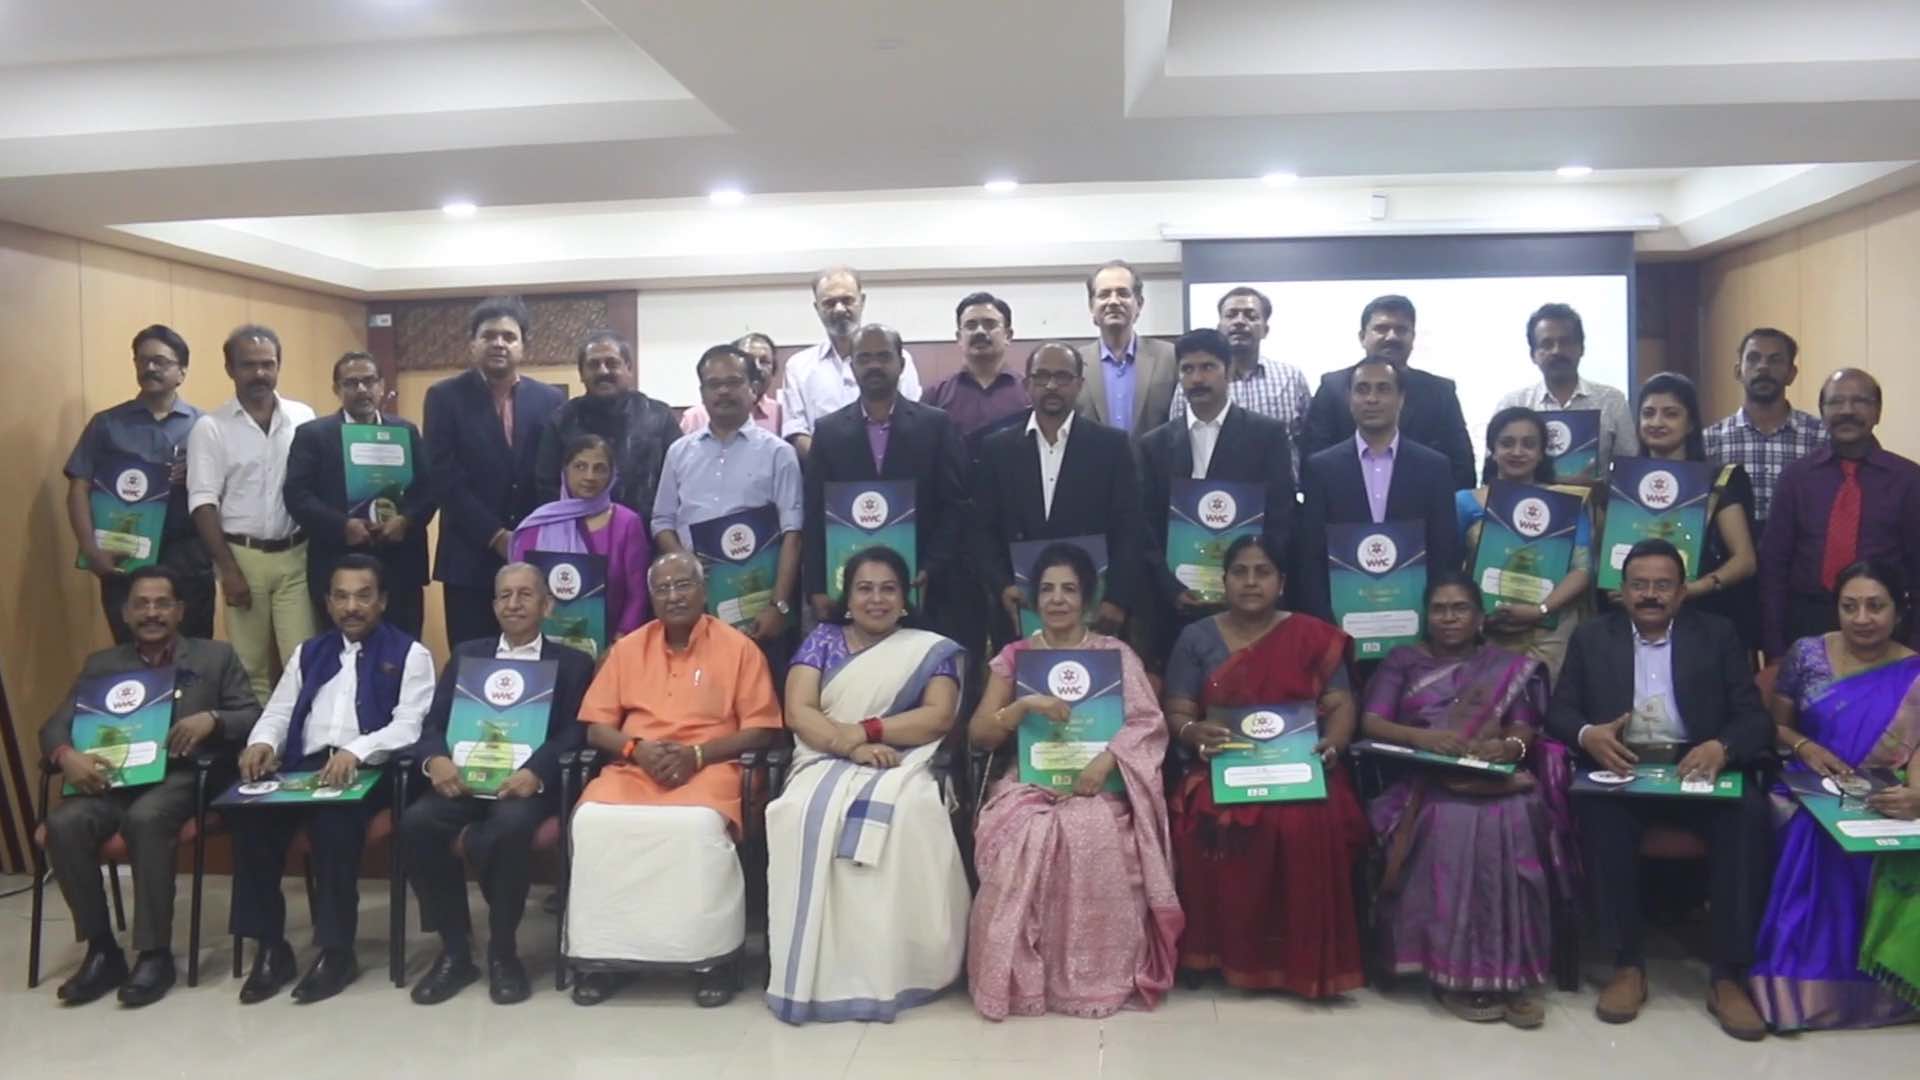 WMC Medical Excellence Awards (Kerala Chapter) Short Video